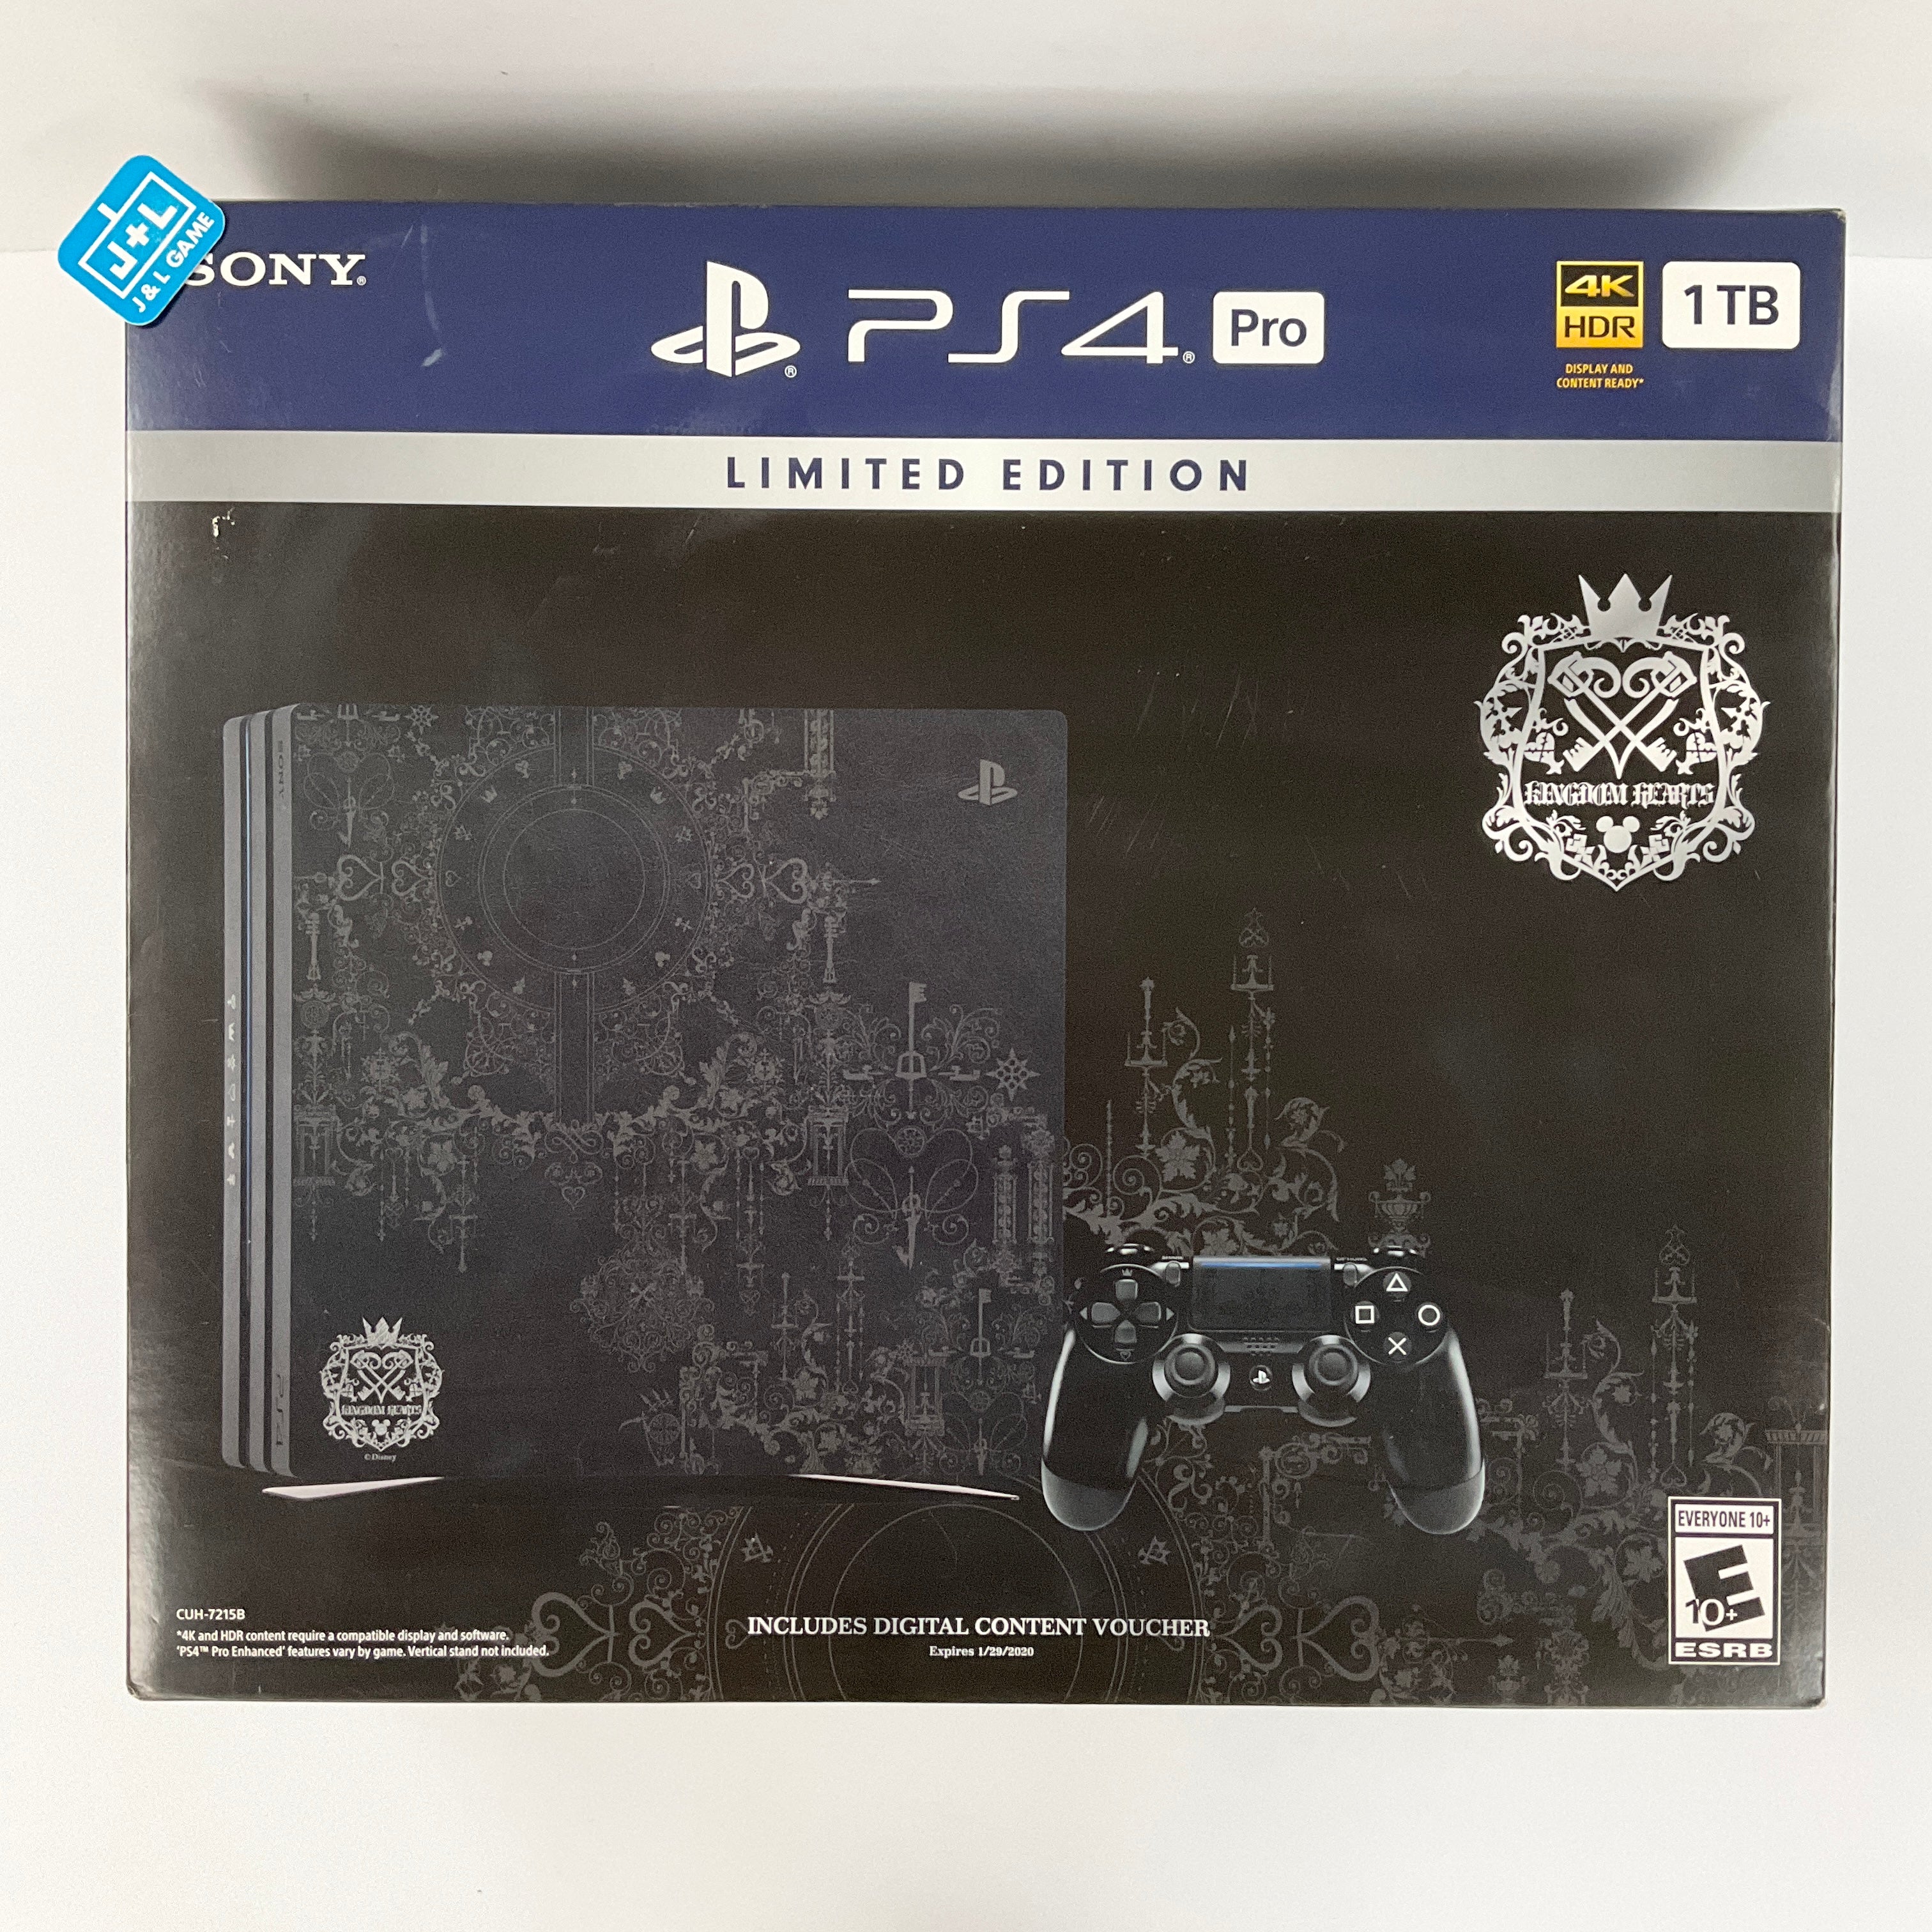 PS4 KINGDOM HEARTS III LIMITED EDITION Pro 1TB Box PlayStation 4